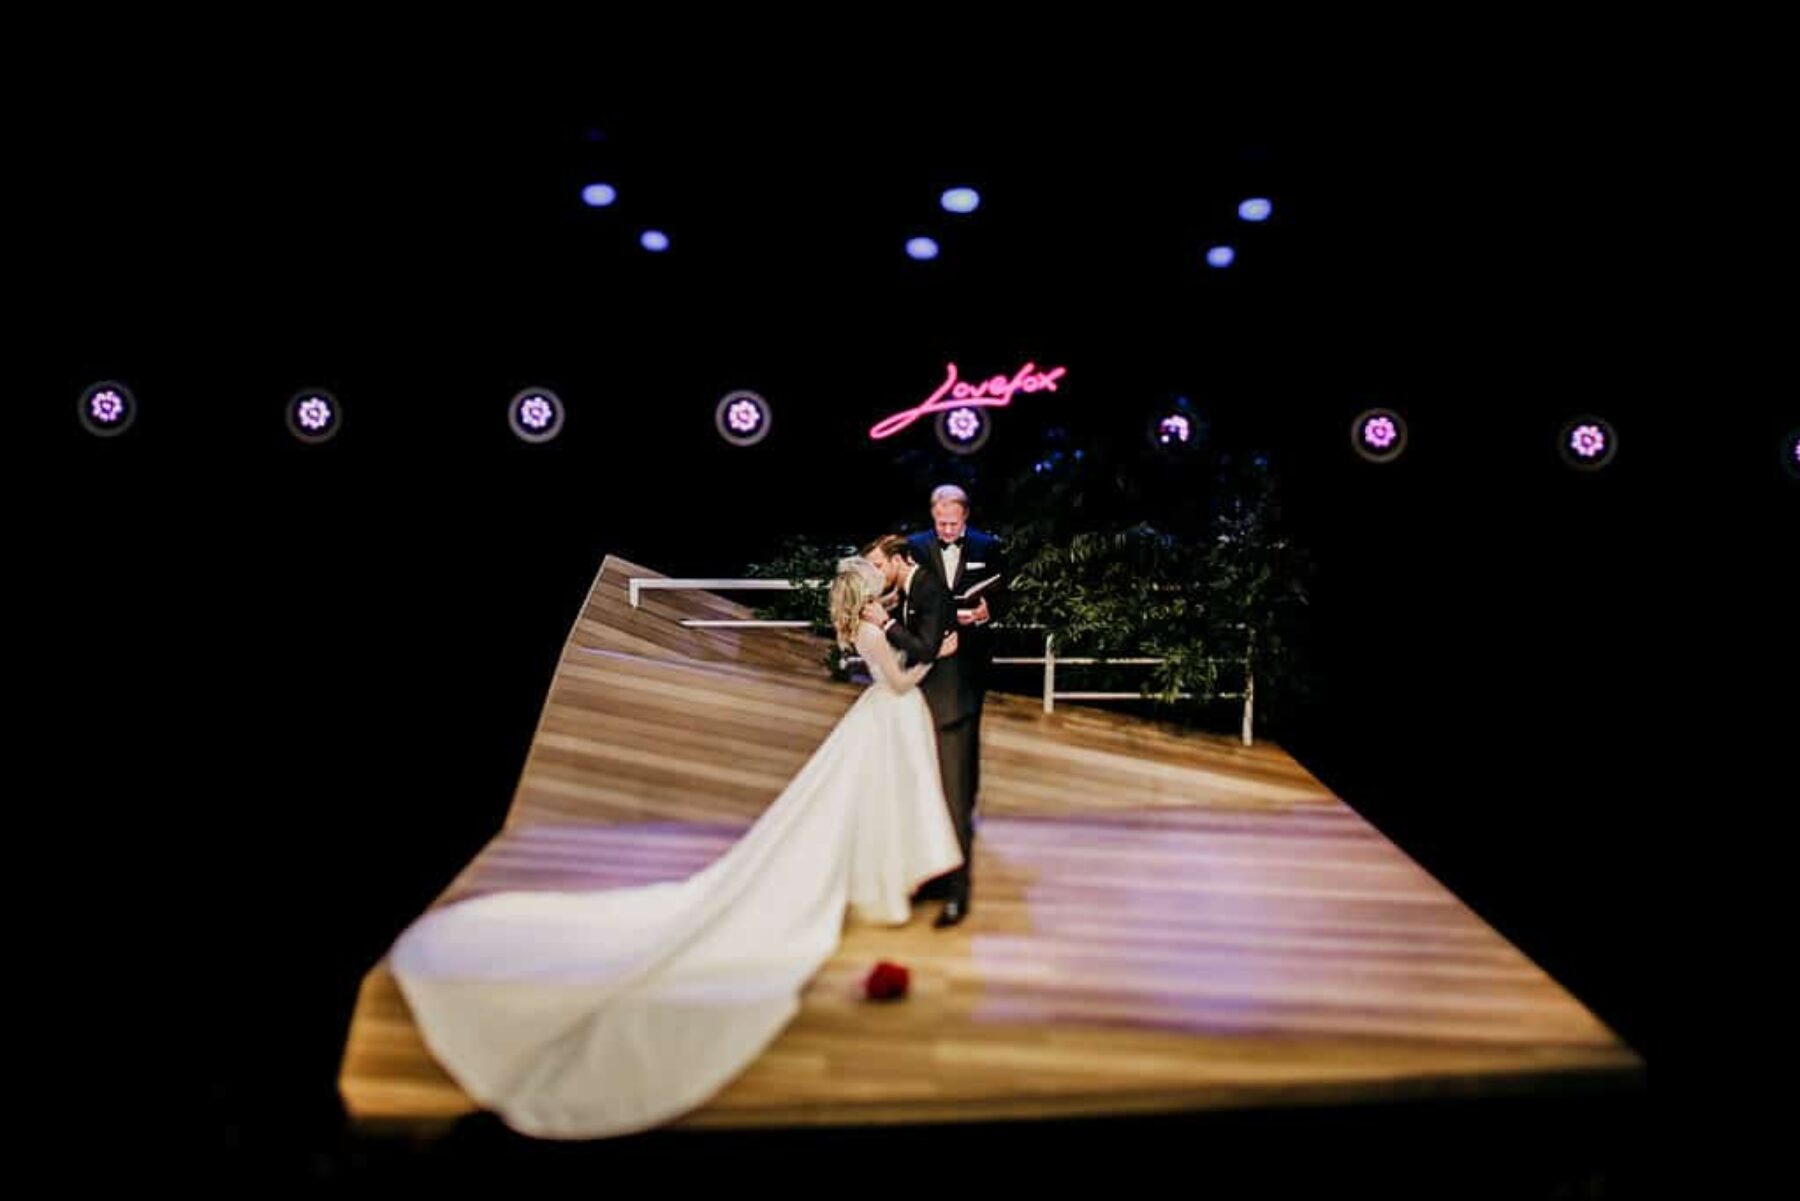 Epic Sydney wedding at Eternity Playhouse - photography by Lara Hotz